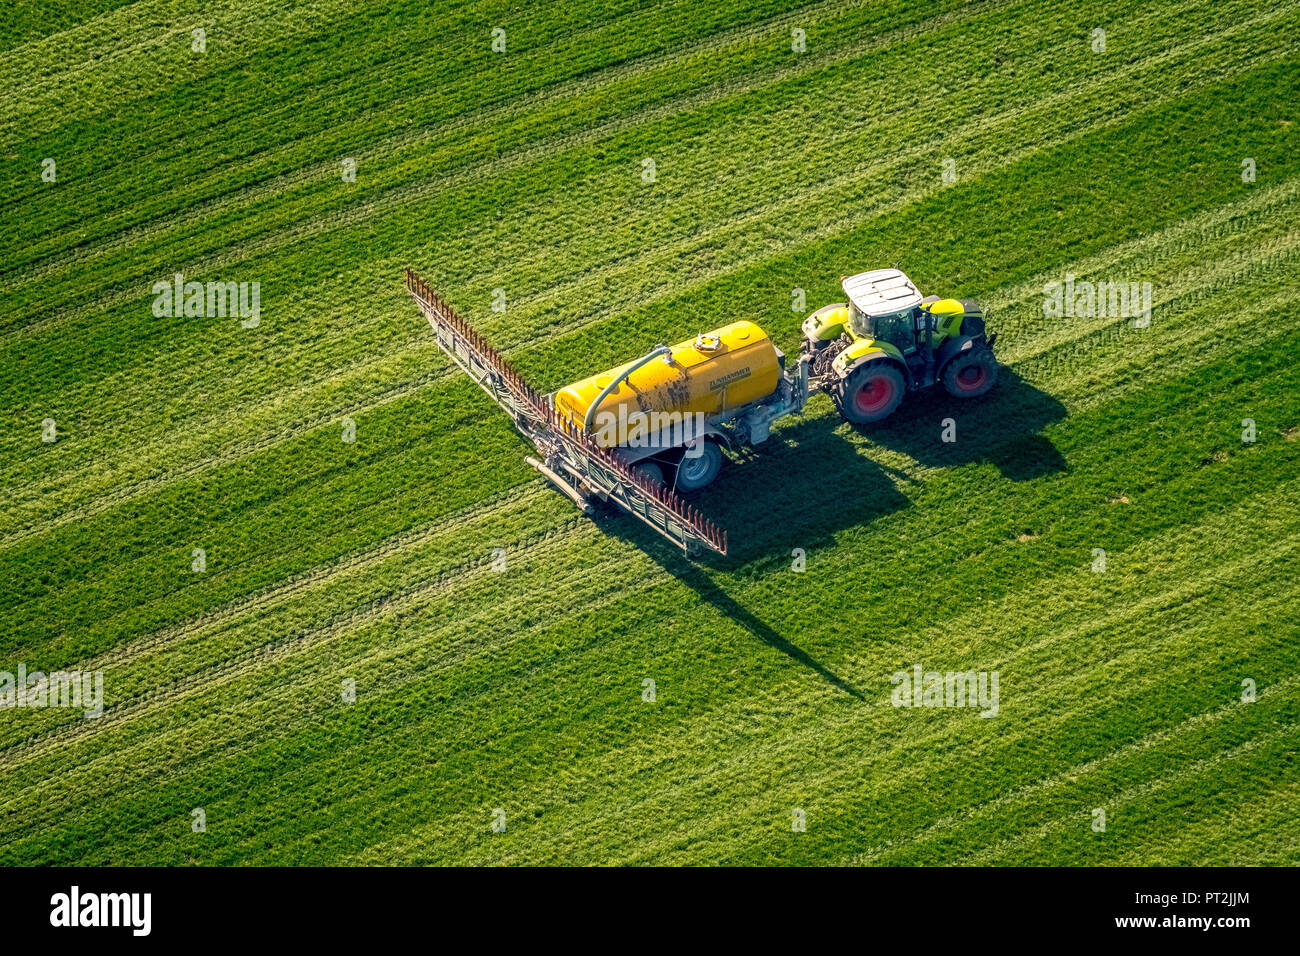 Tractor with pesticide shot, environmental toxins, fertilizer, Holsterhausen, Dorsten, Ruhr area, North Rhine-Westphalia, Germany Stock Photo